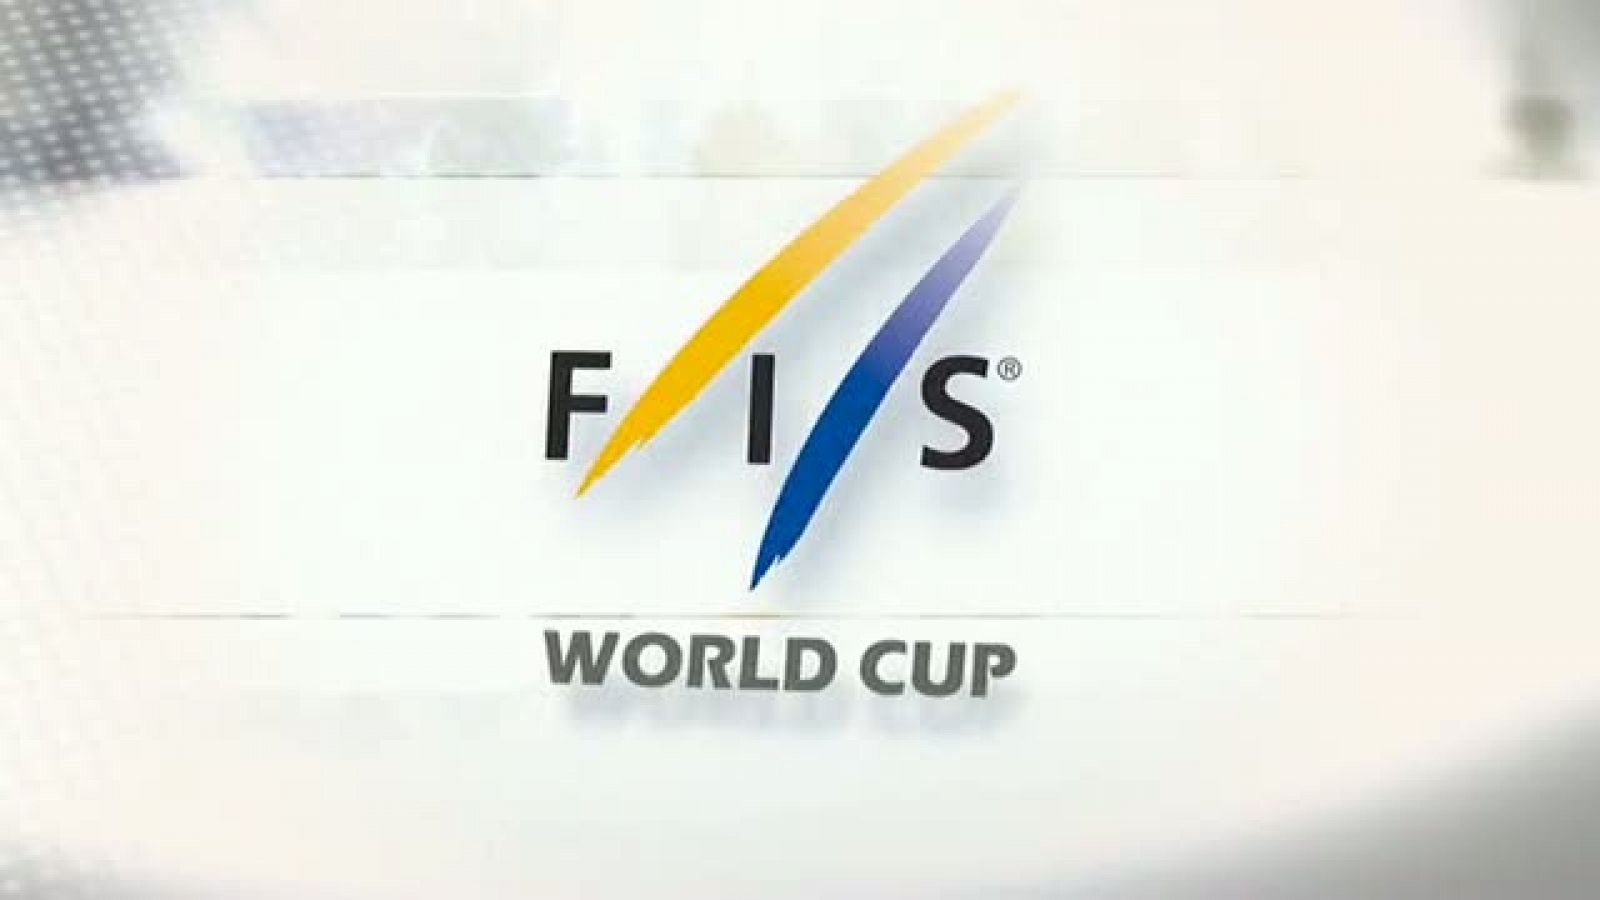 Esquí Freestyle - Copa del Mundo. Final Slopestyle, masculino y femenino